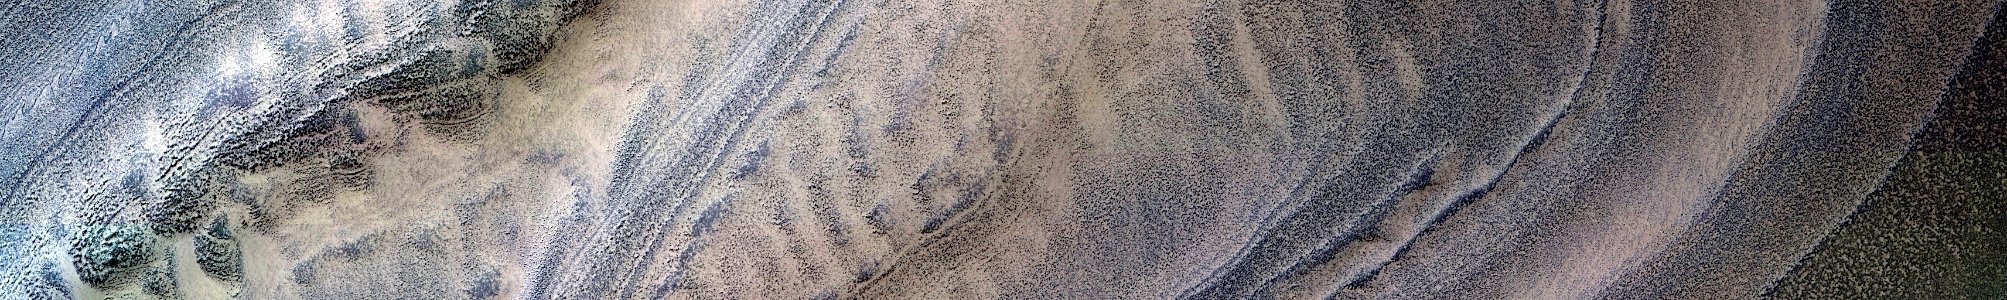 Mars - North Polar Layered Deposits Exposure photo